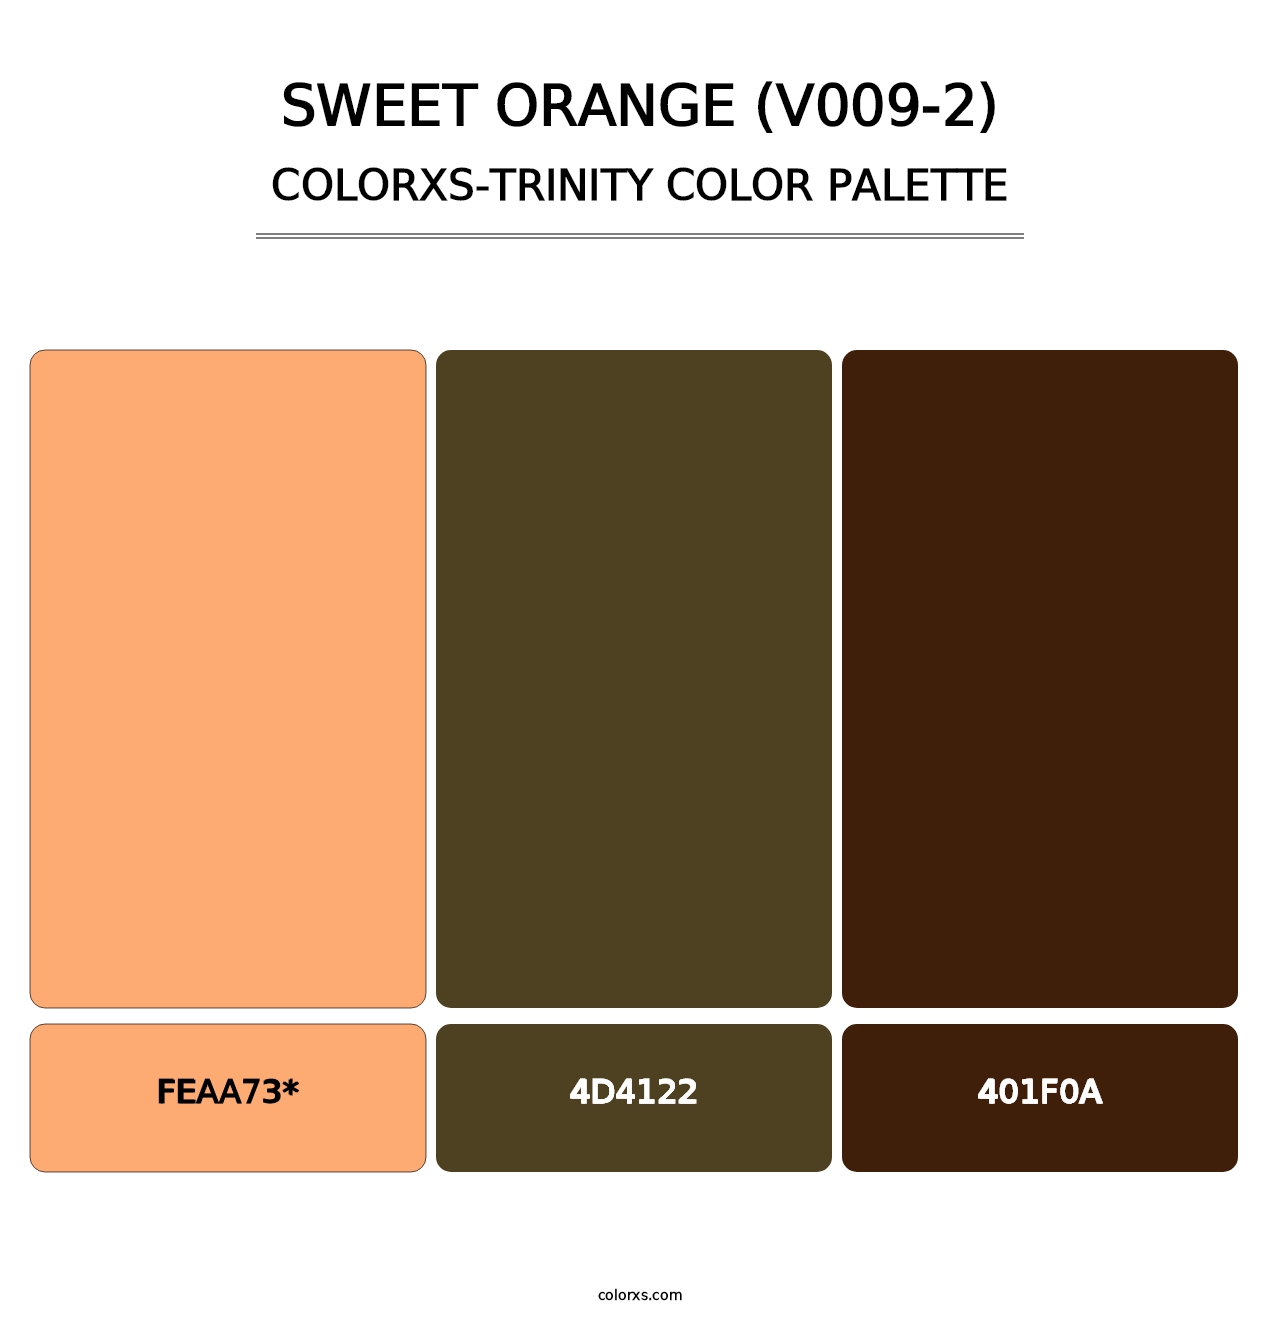 Sweet Orange (V009-2) - Colorxs Trinity Palette